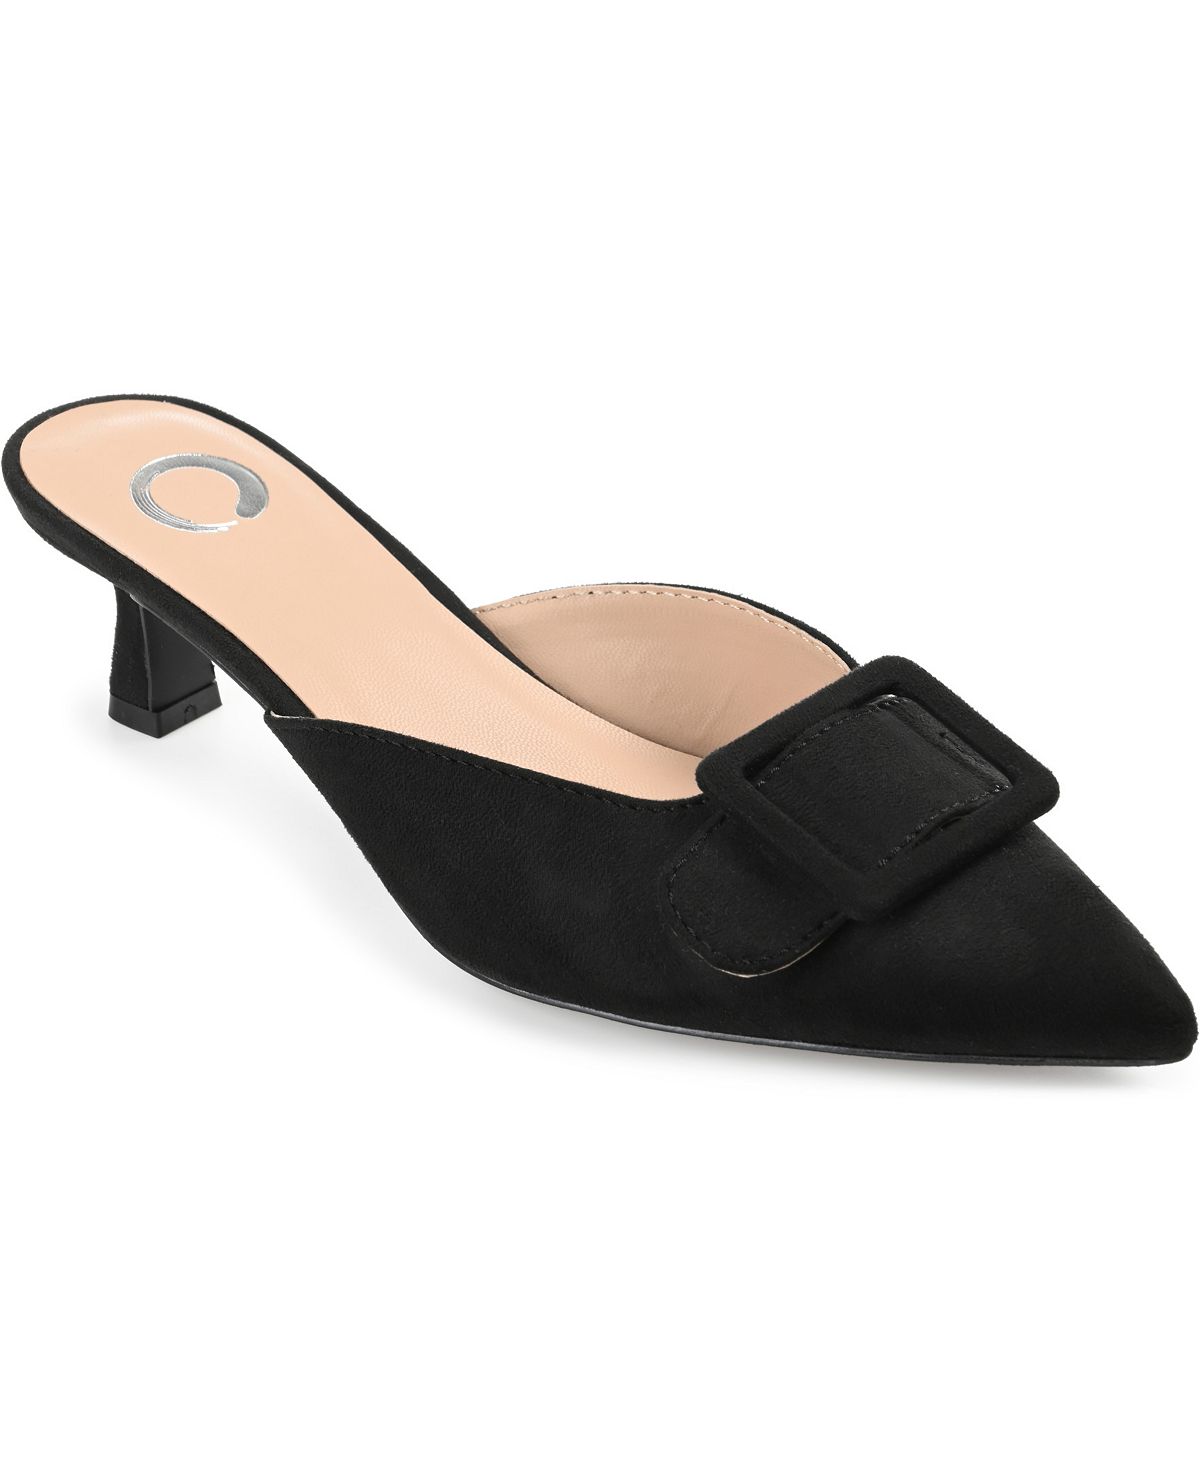 Женские туфли без каблука Vianna Journee Collection, черный